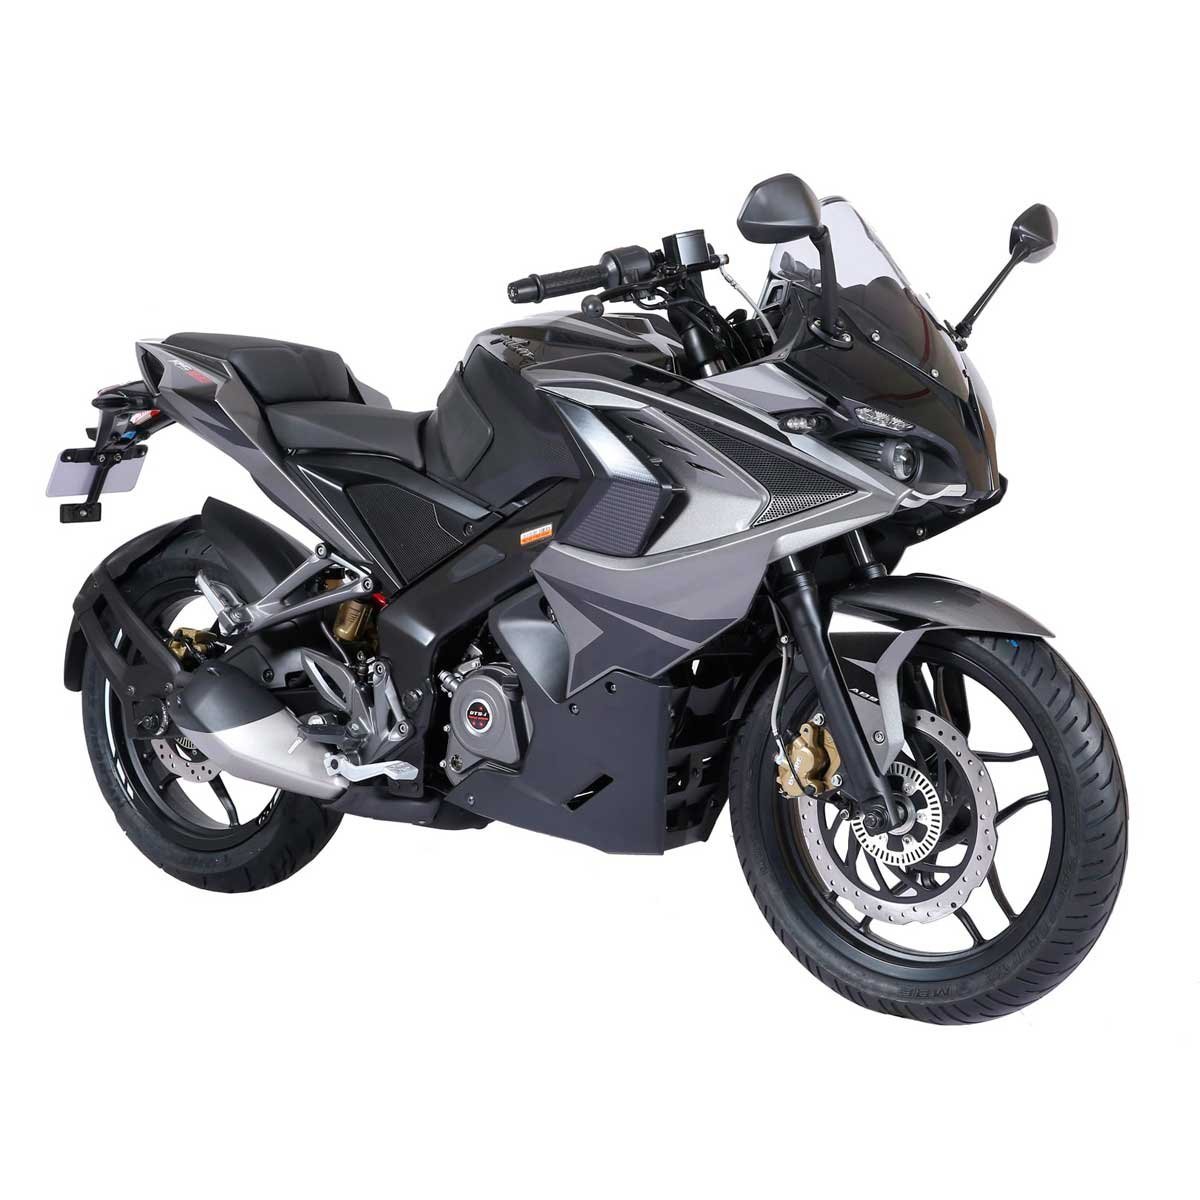 Motocicleta Pulsar Rs 200 Cc Negra Bajaj